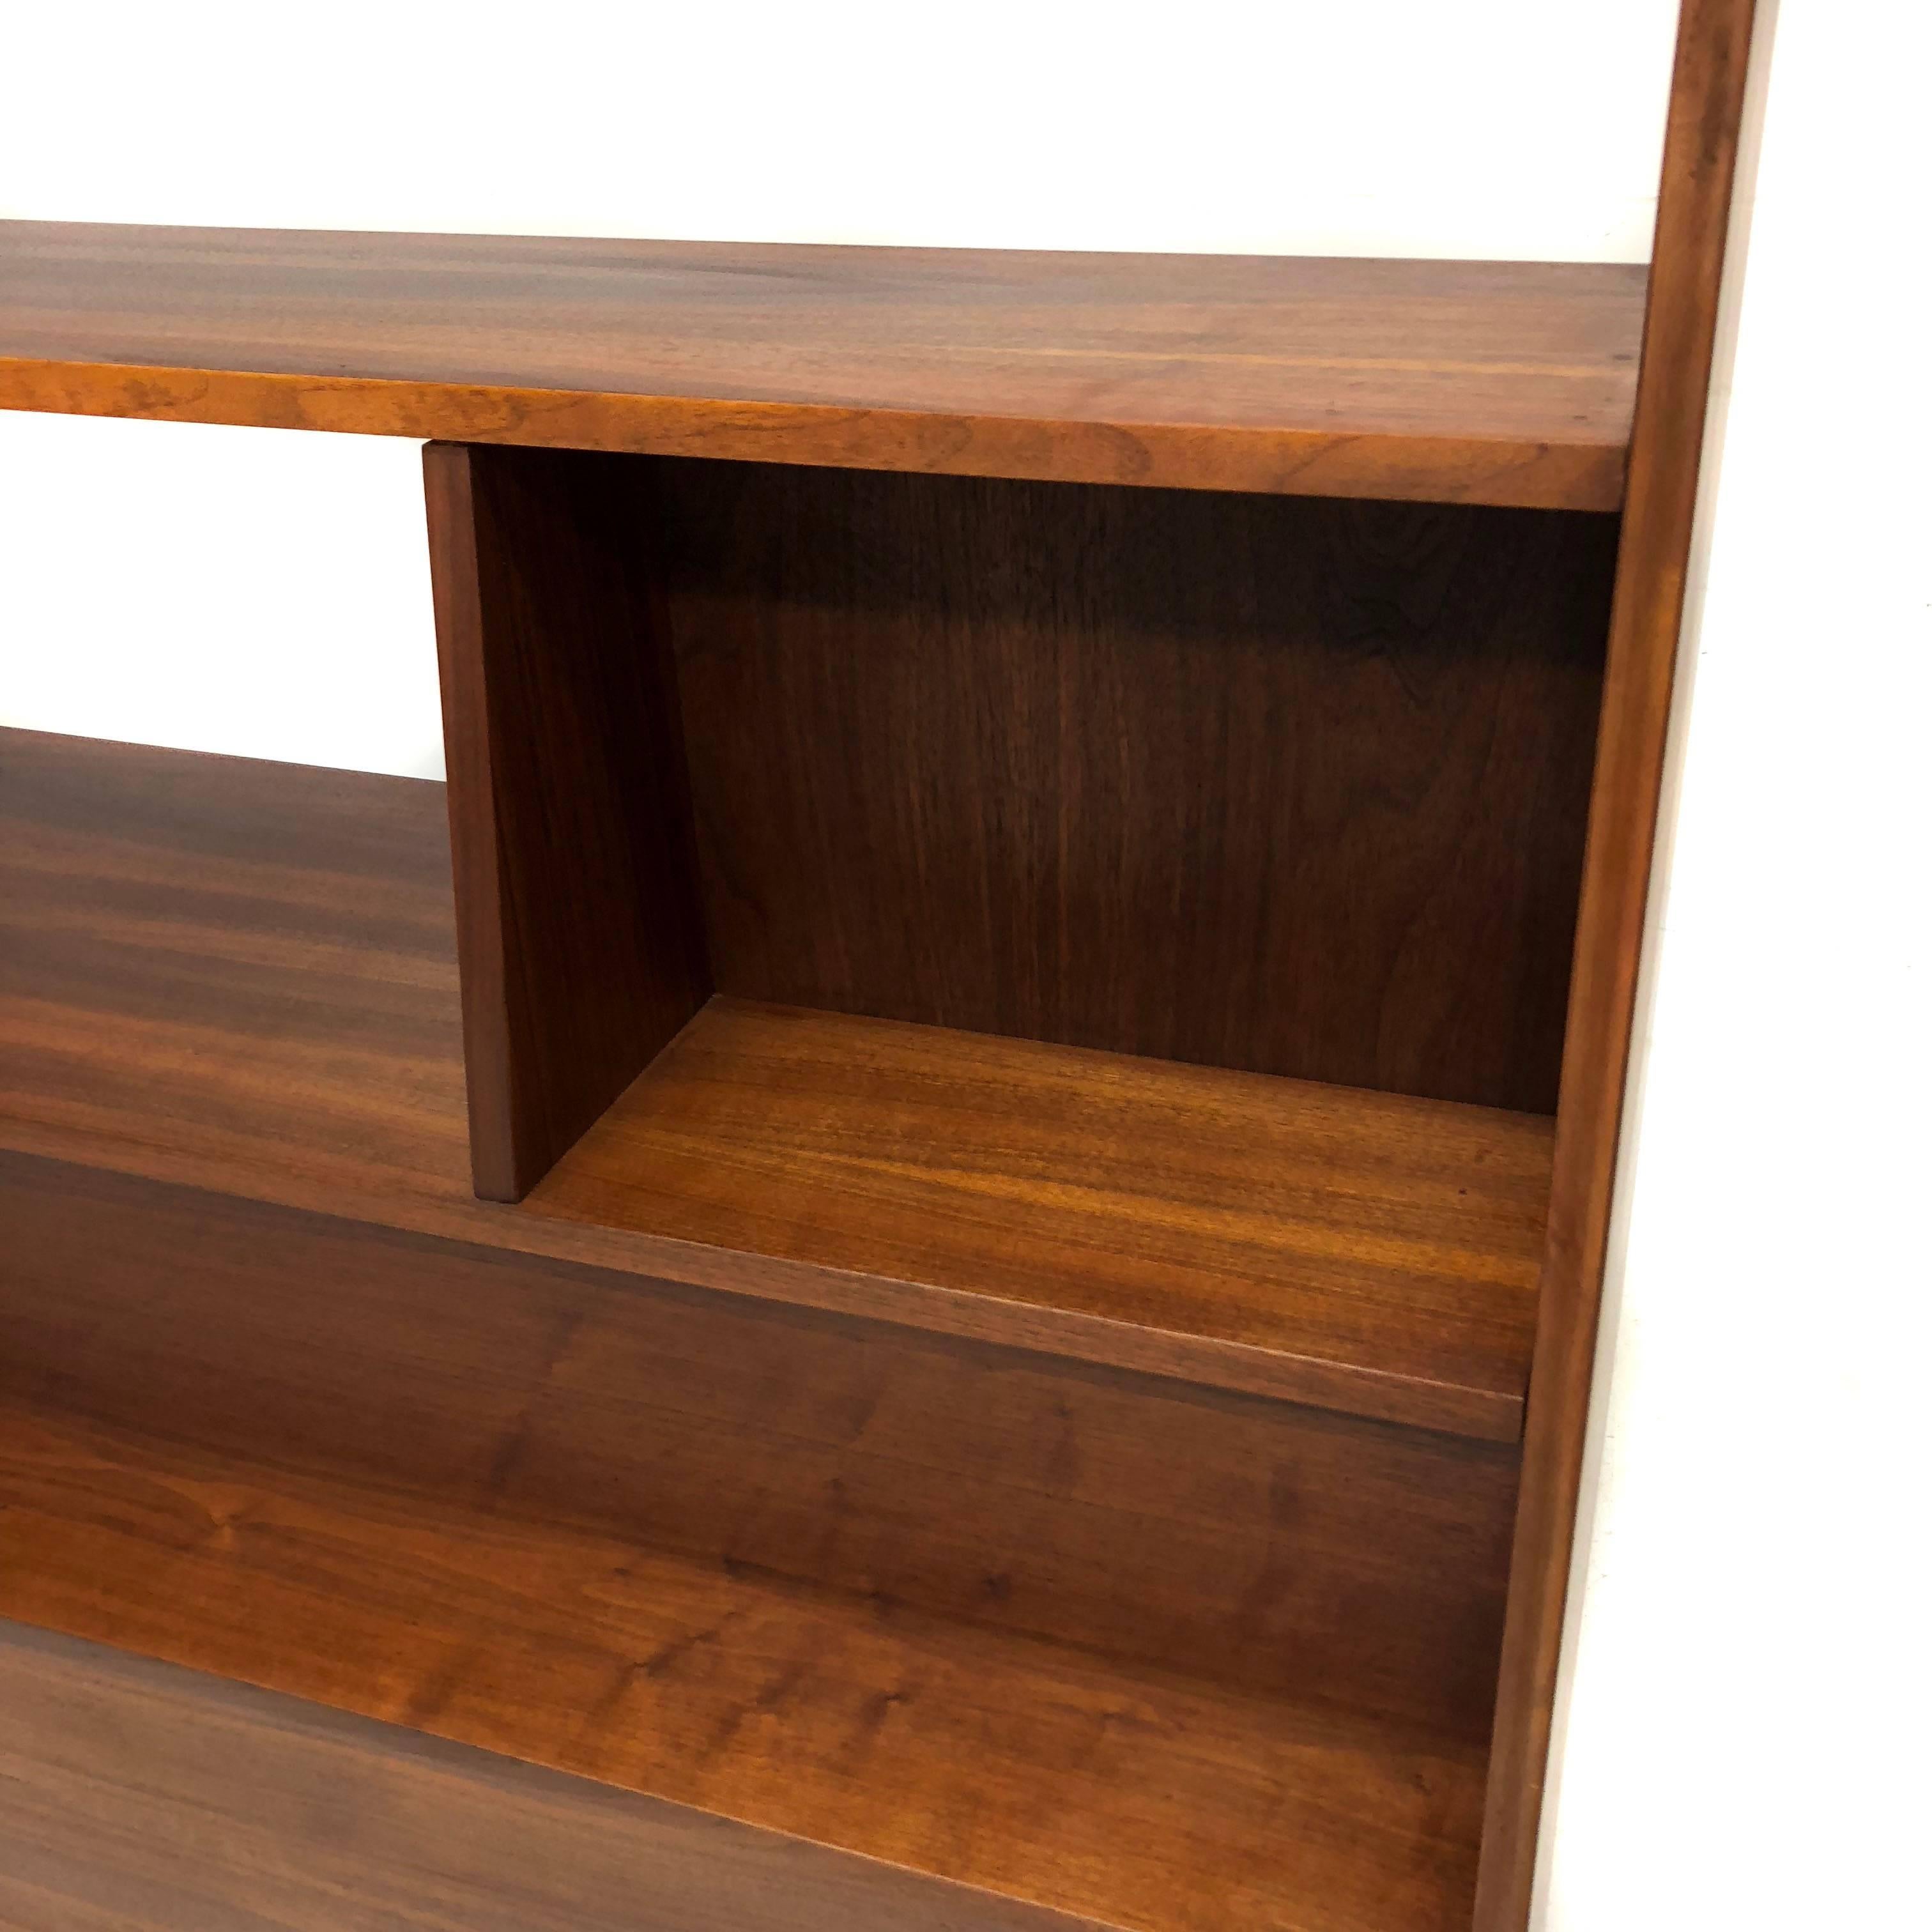 Walnut Mid-Century Modern Bookshelf Room Divider with Storage For Sale